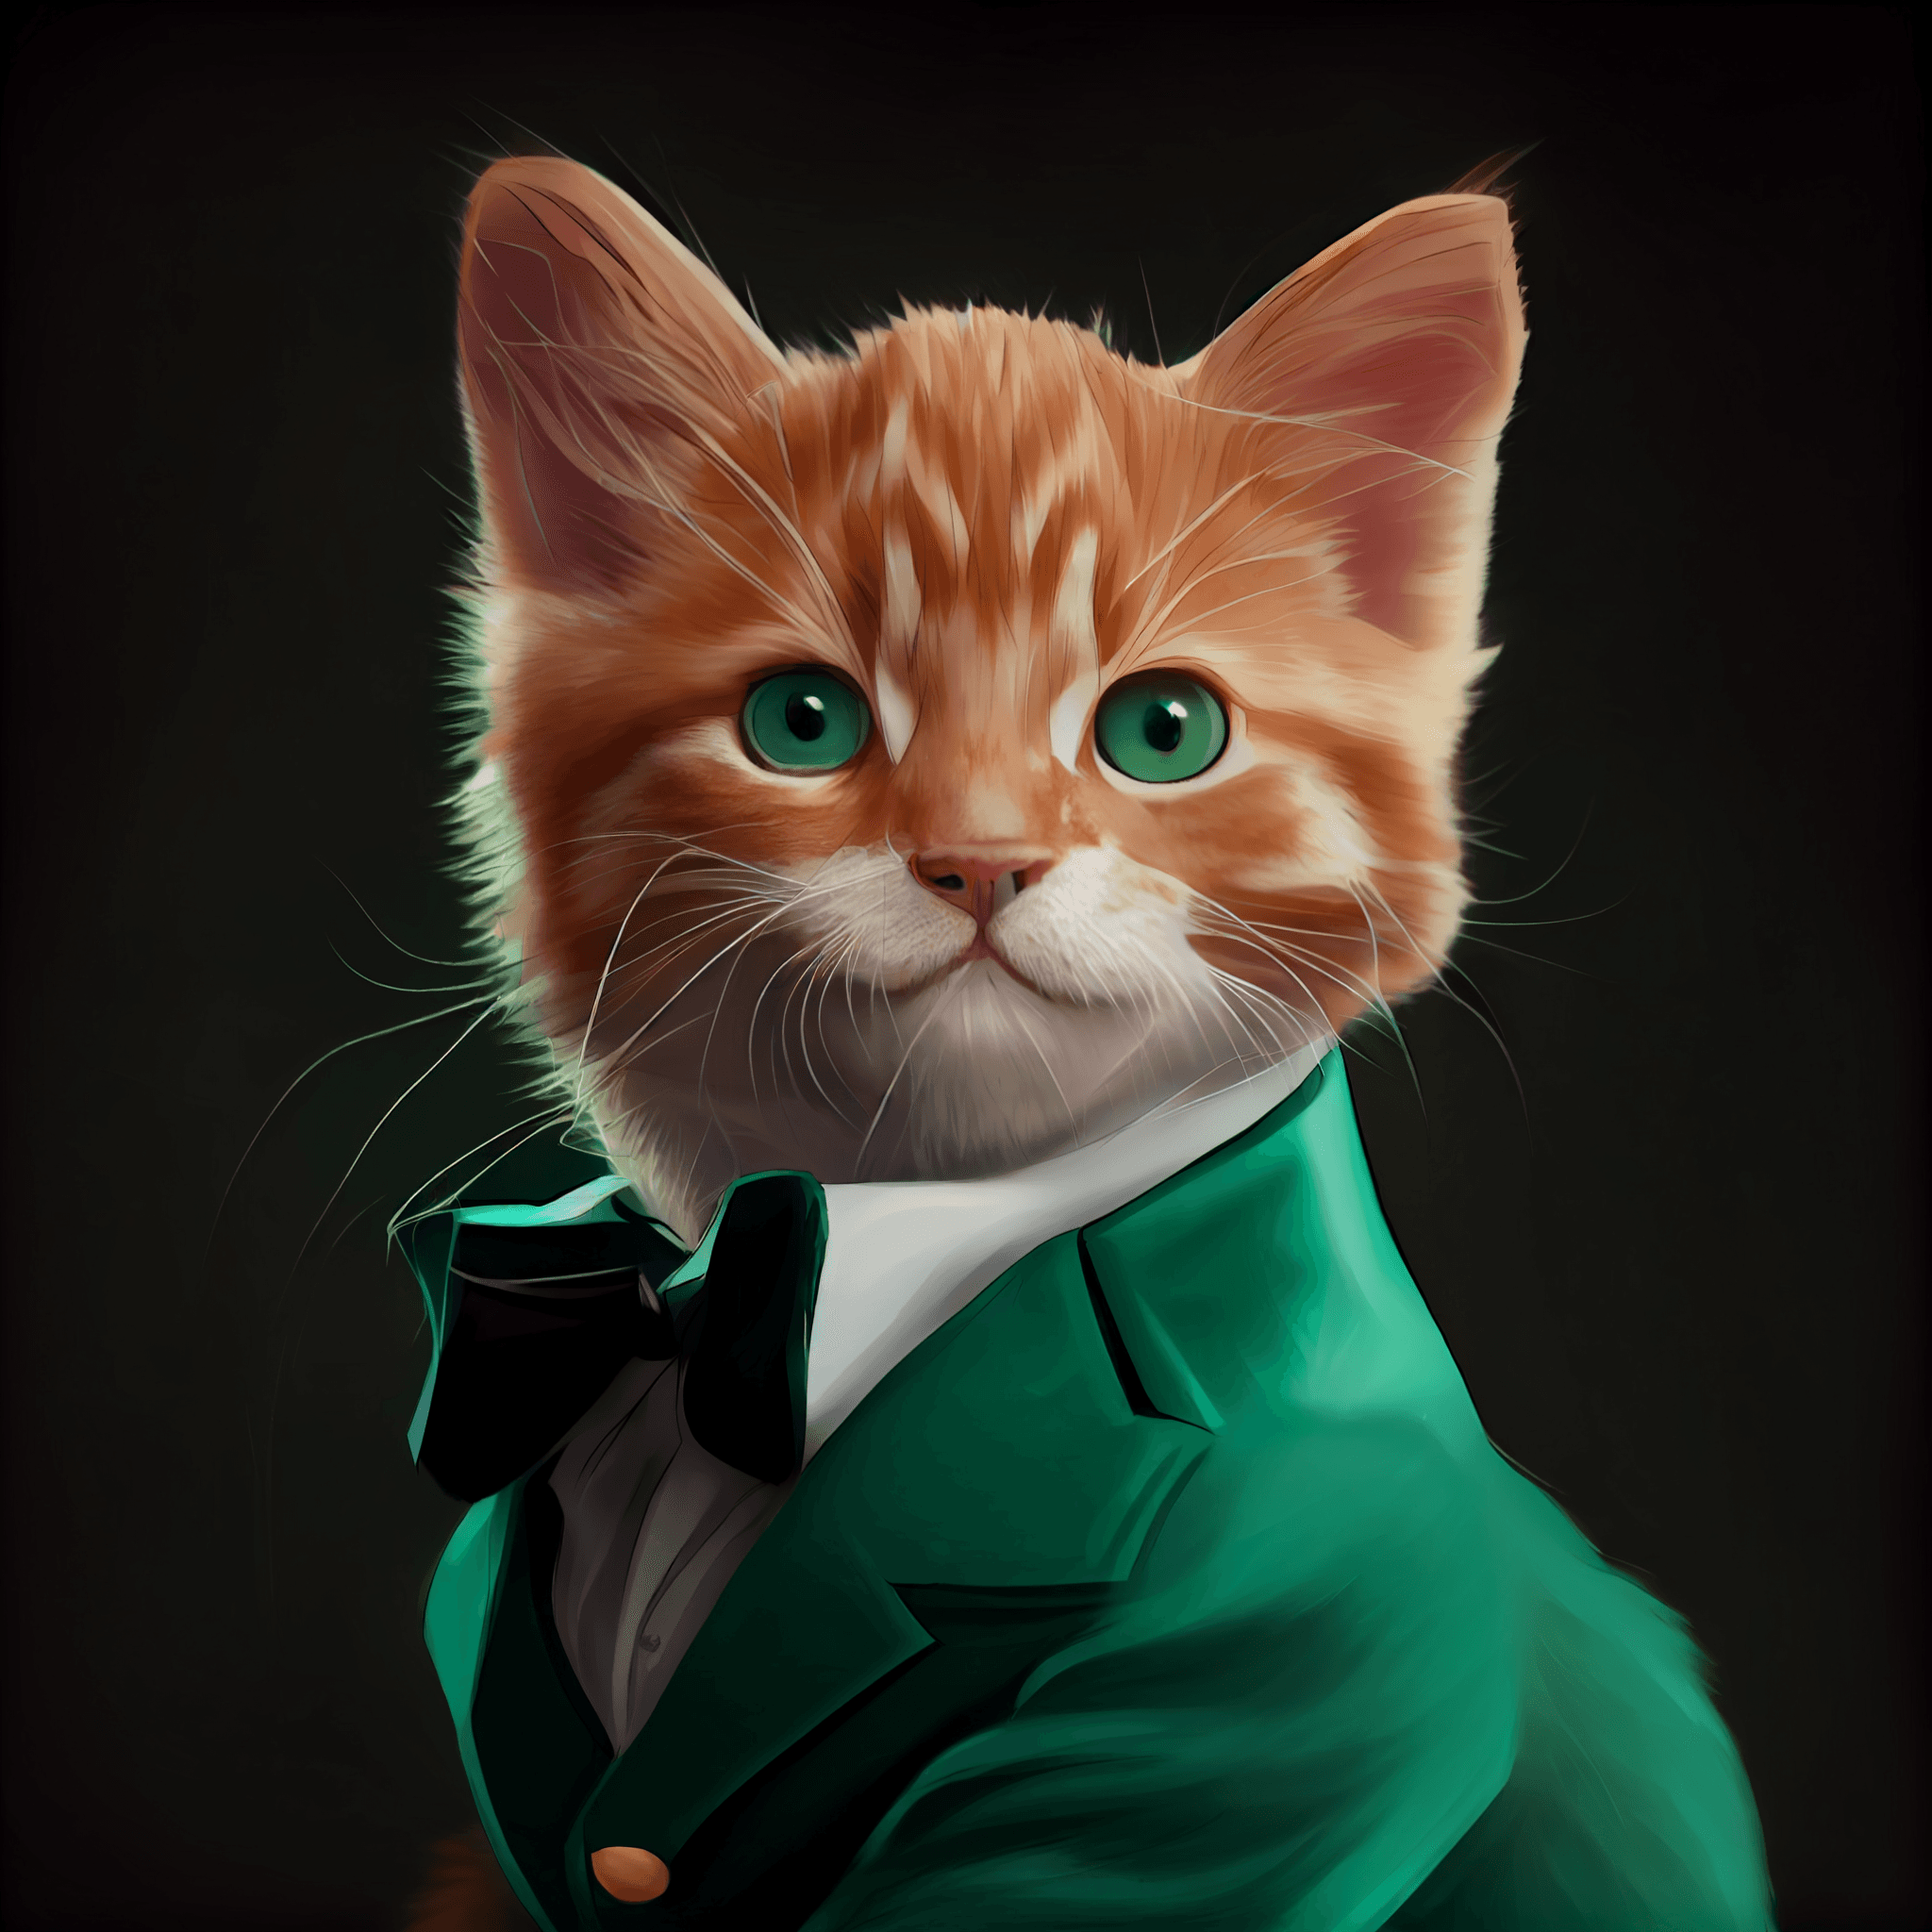 Cute ginger kitten in green tuxedo NFT cruzo